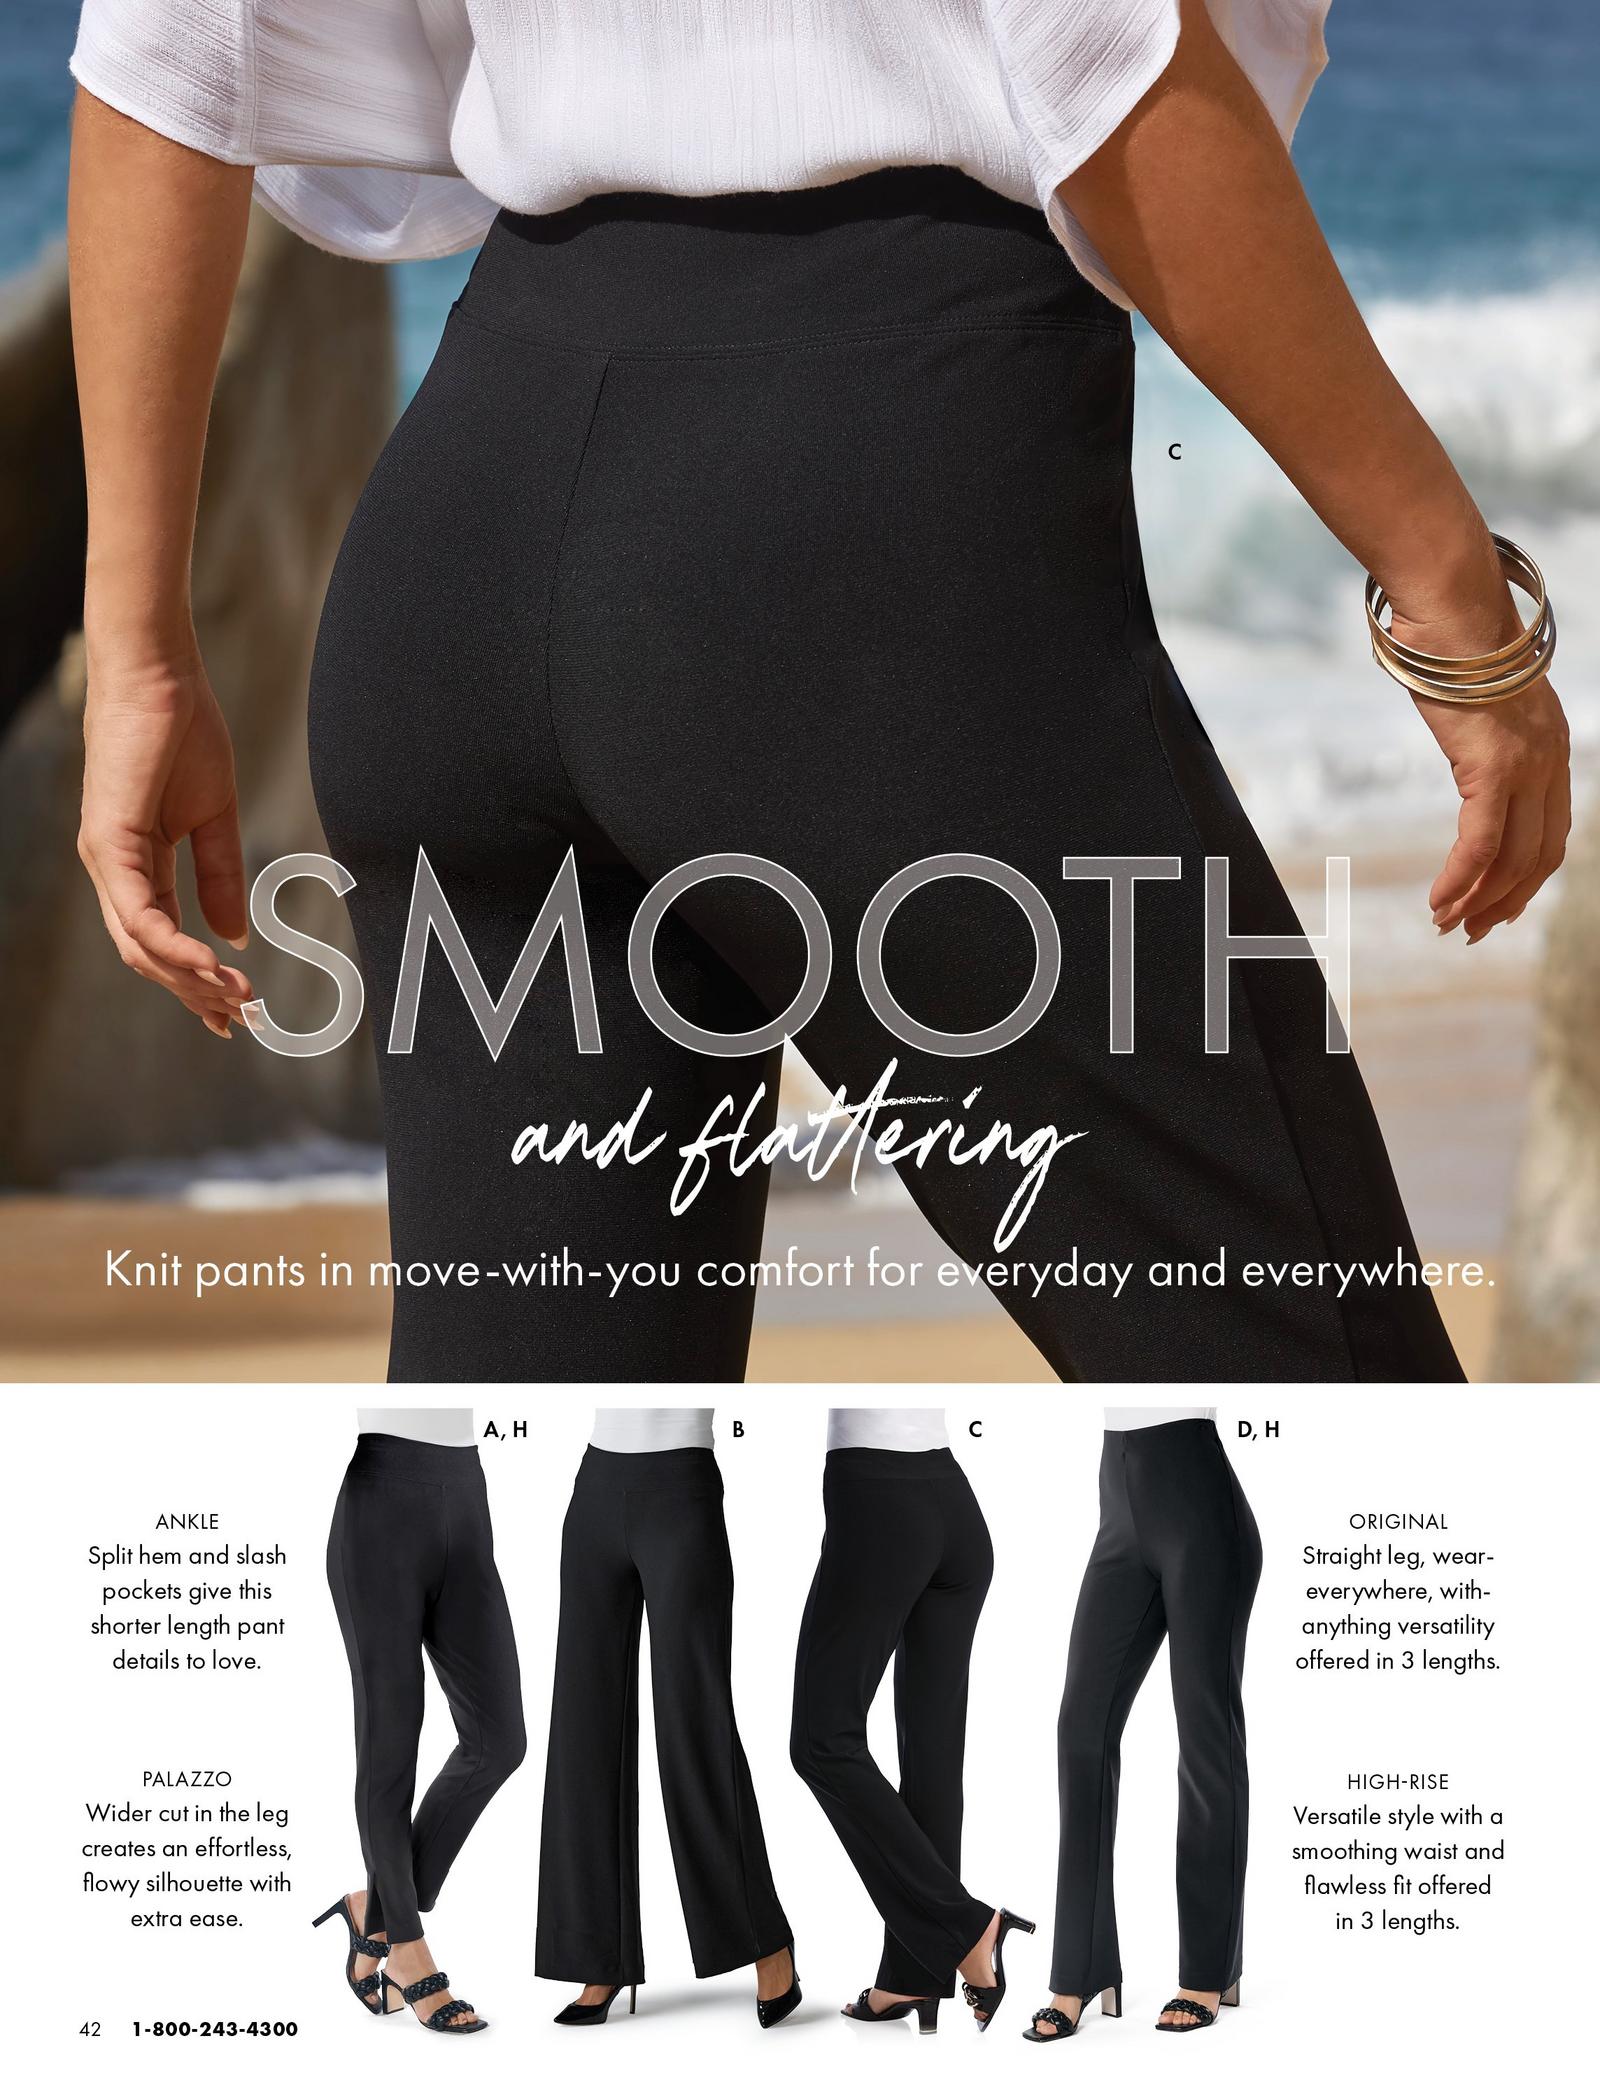 top model wearing black straight-leg pants. bottom panel shows black leggings, black palazzo pants, black straight-leg pants, and black high-waist straight-leg pants.